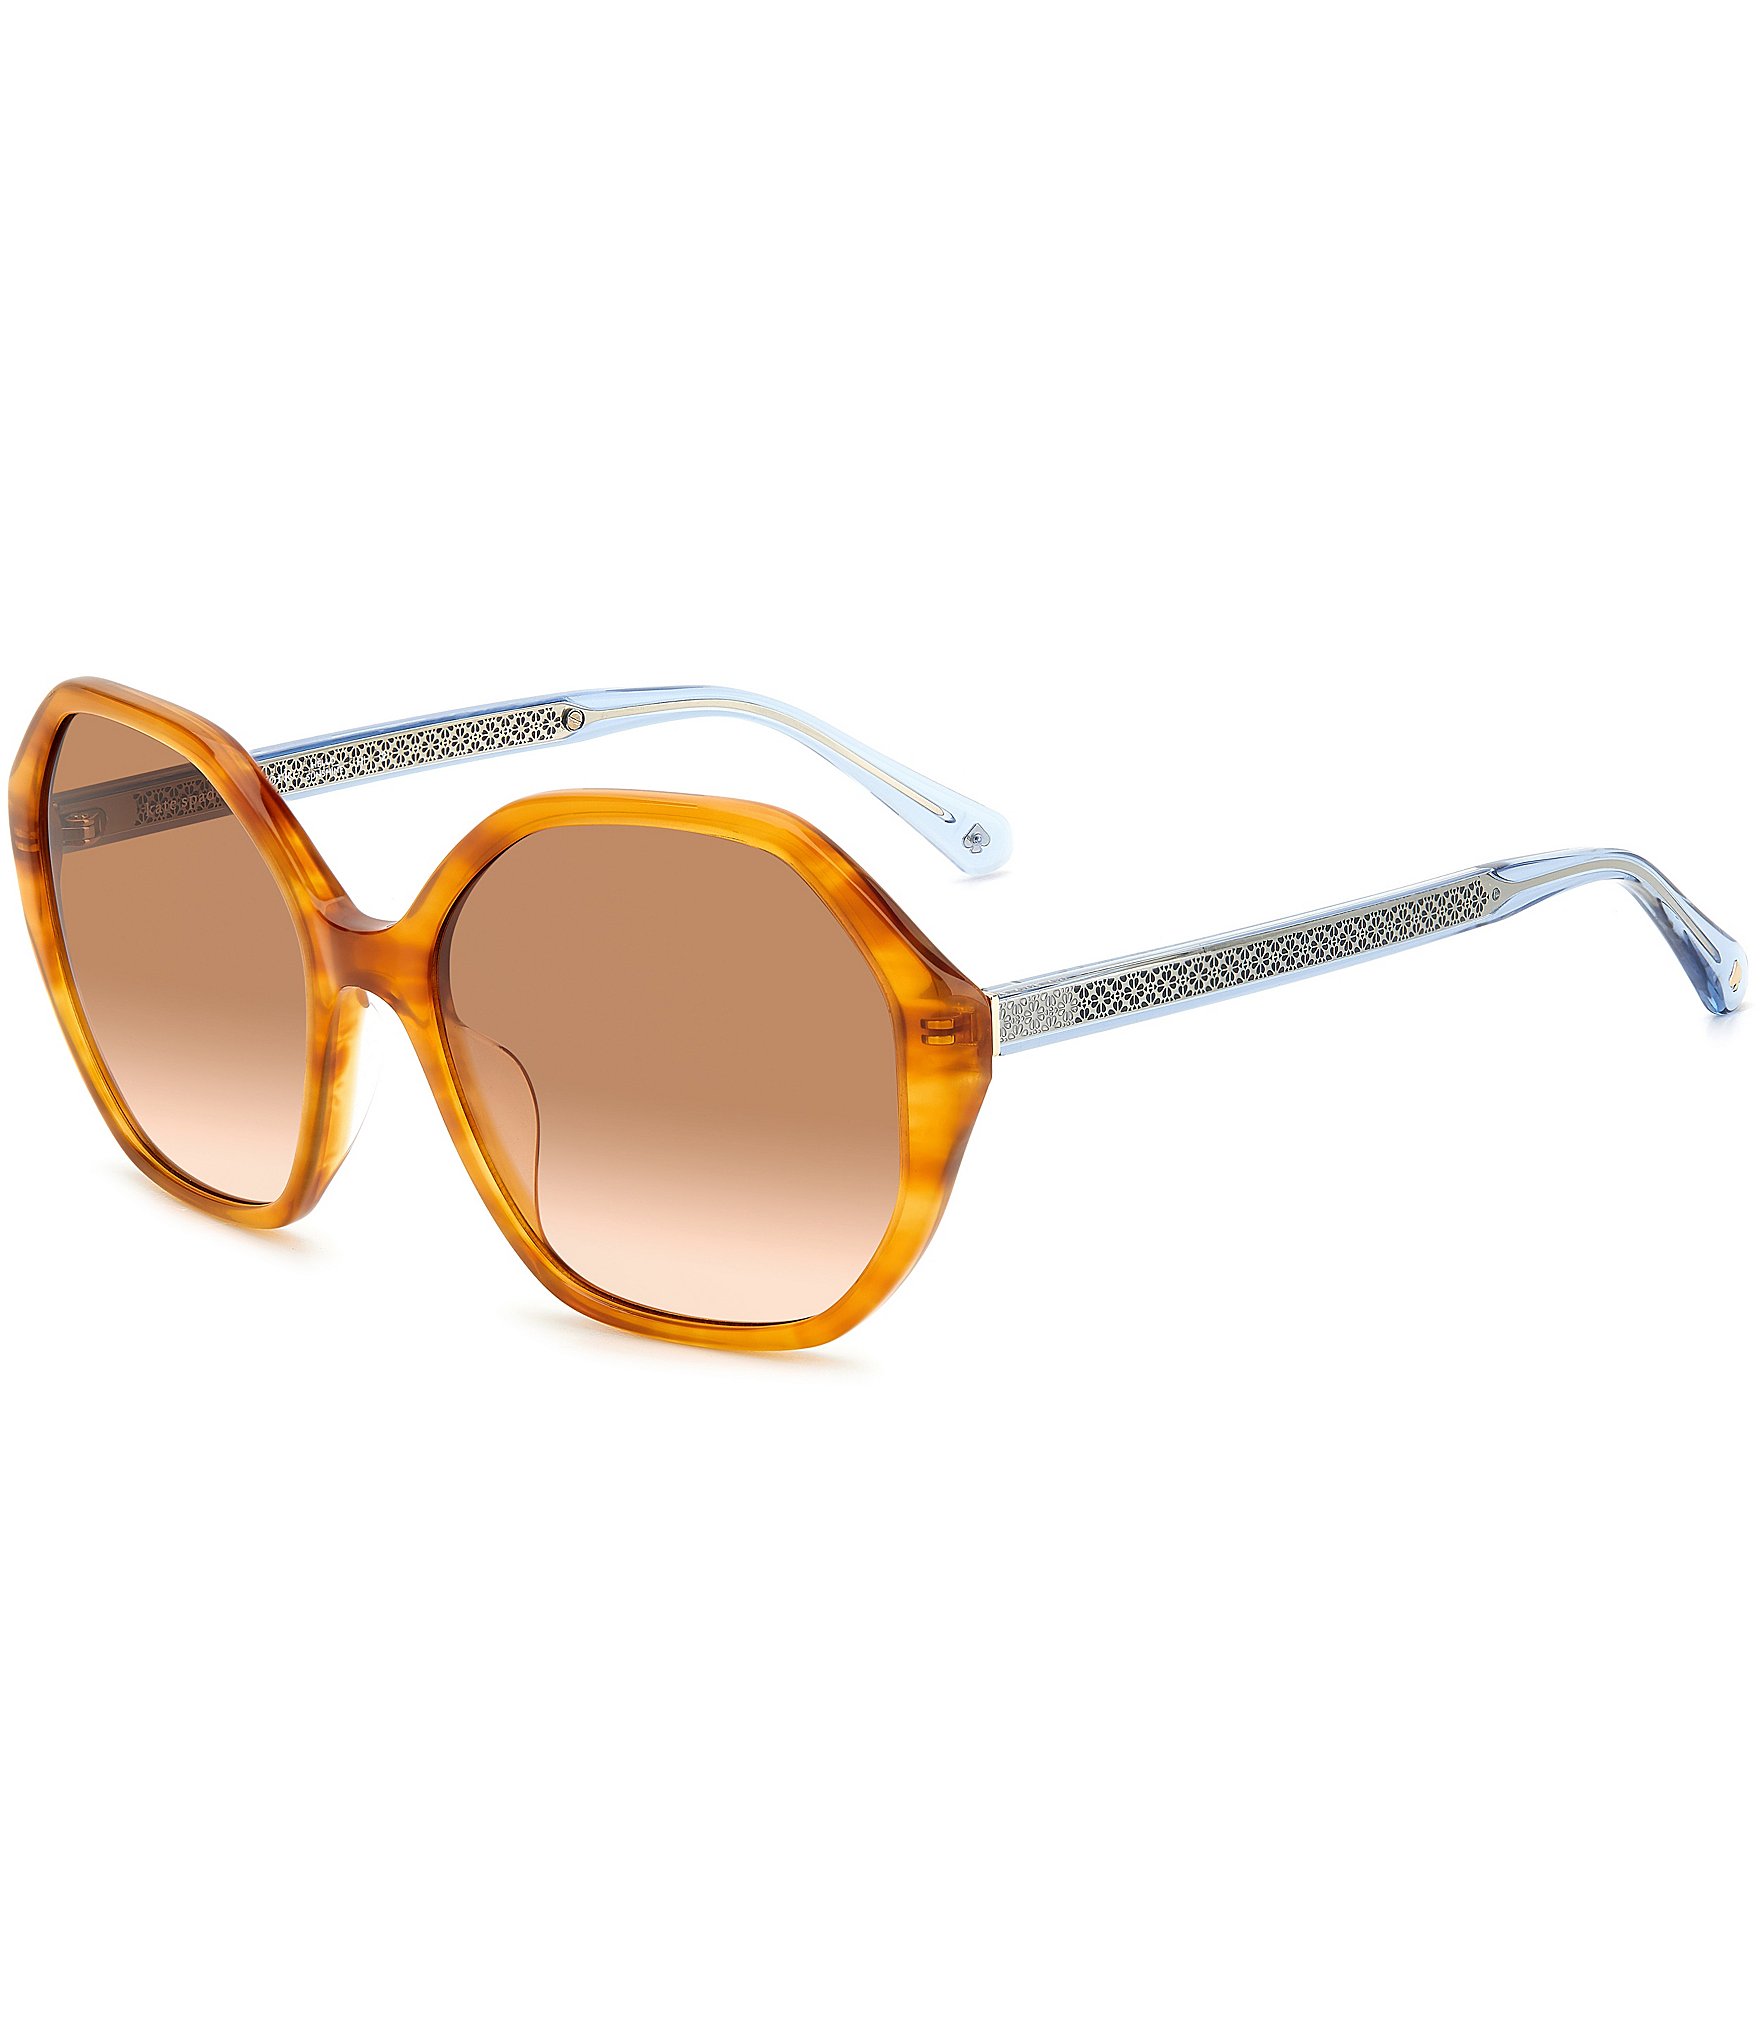 kate spade new york Women's Waverly Hexagonal Frame Sunglasses Dillard's